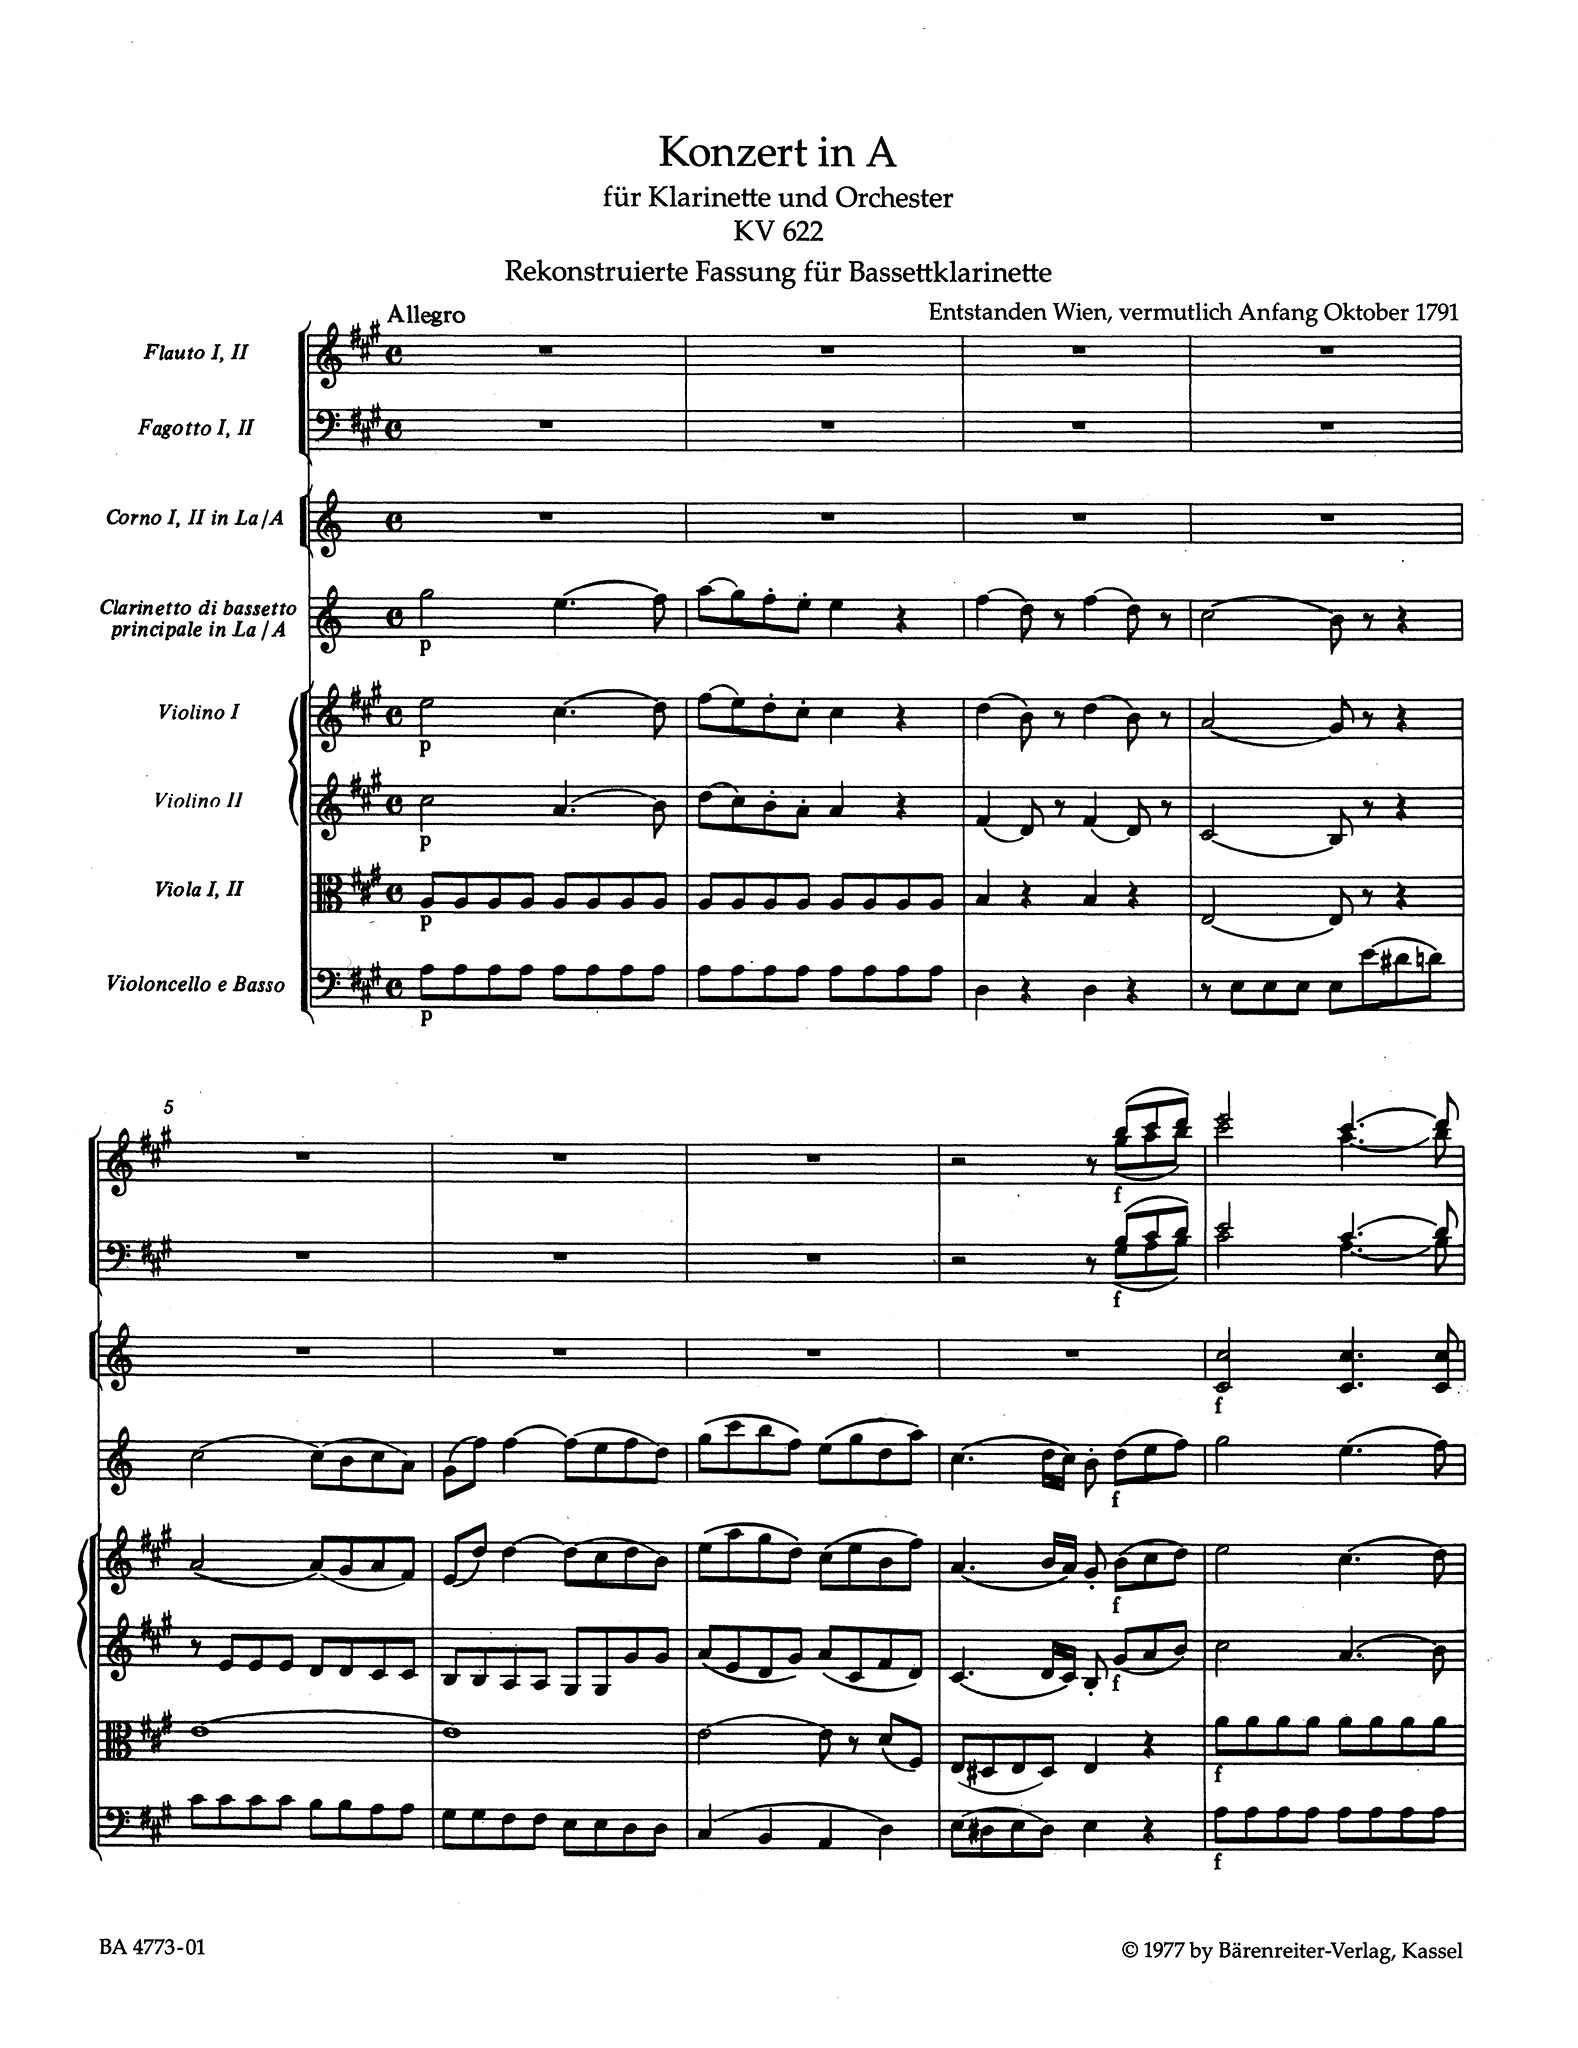 Clarinet Concerto in A Major, K. 622 - Movement 1